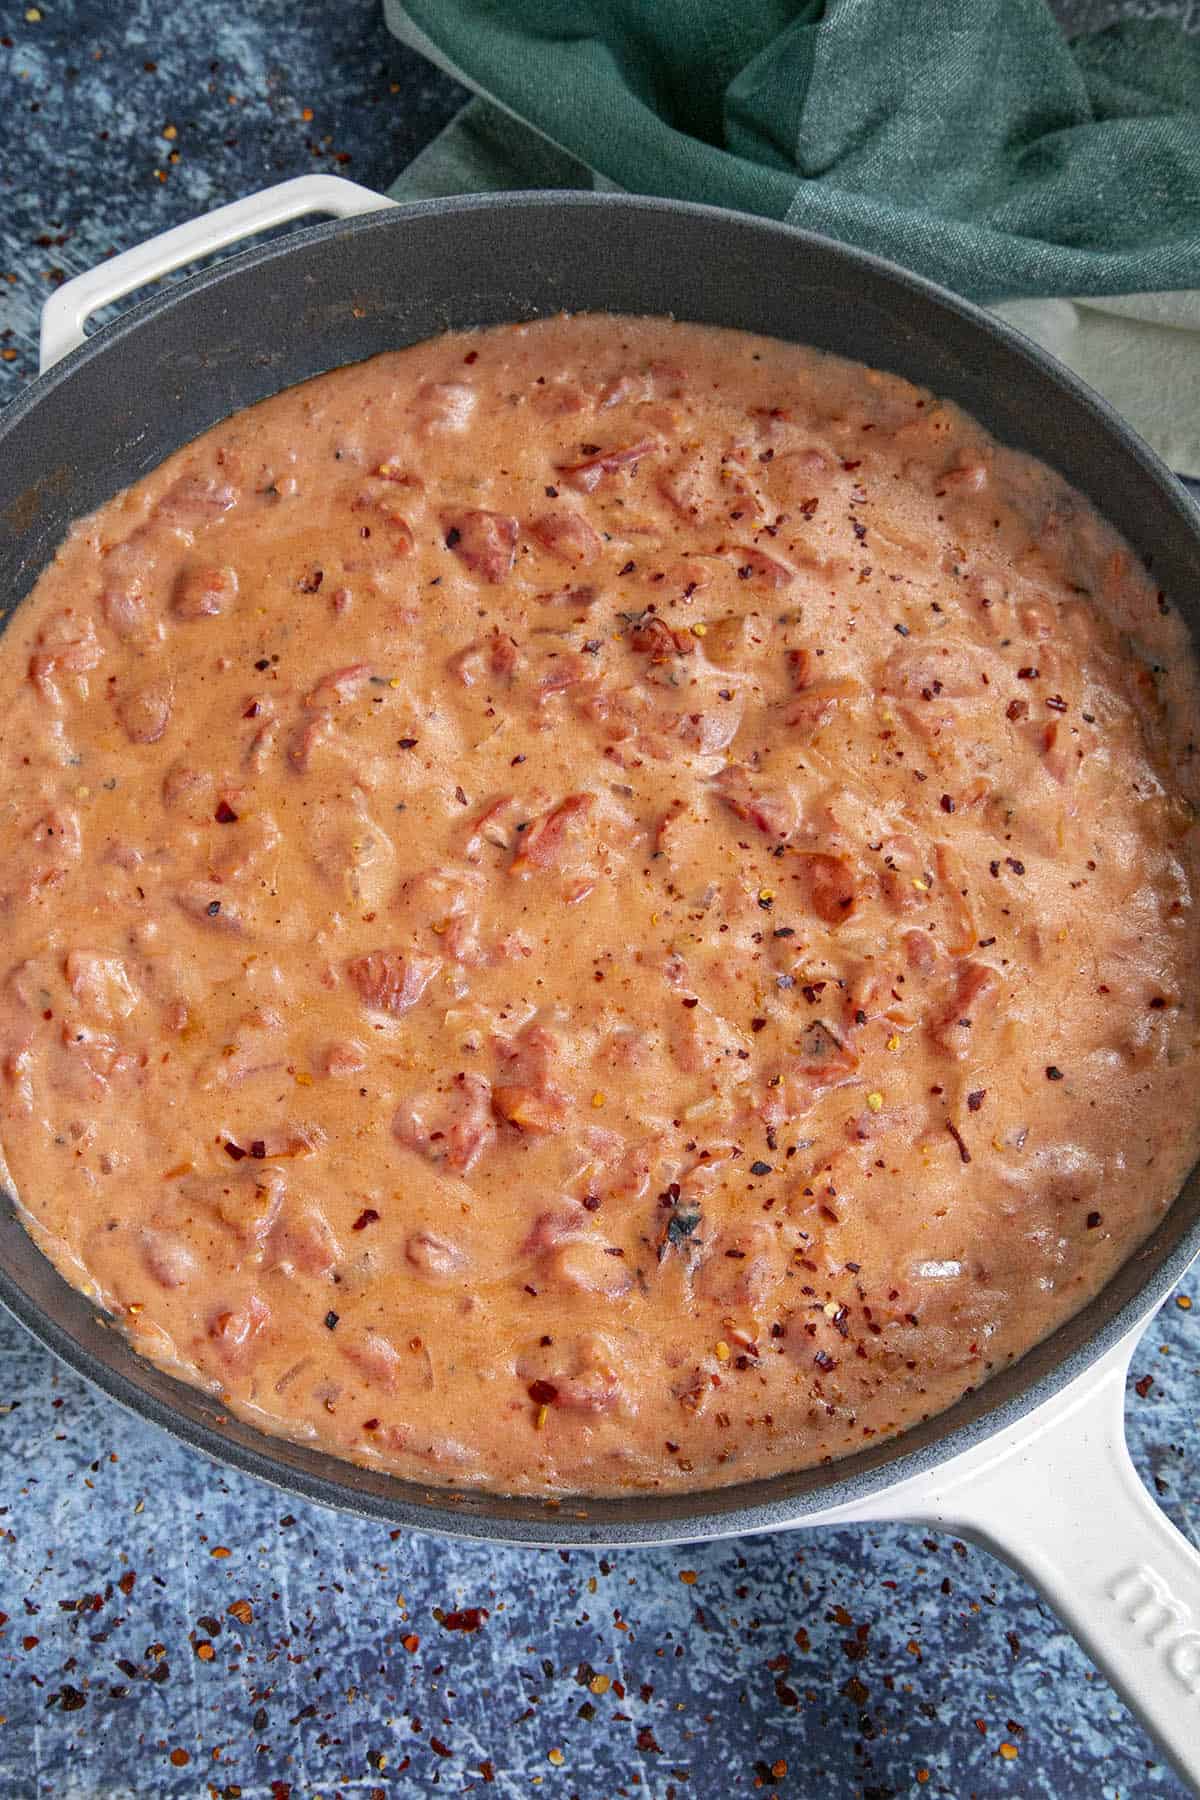 Tomato gravy in a pan, ready to serve